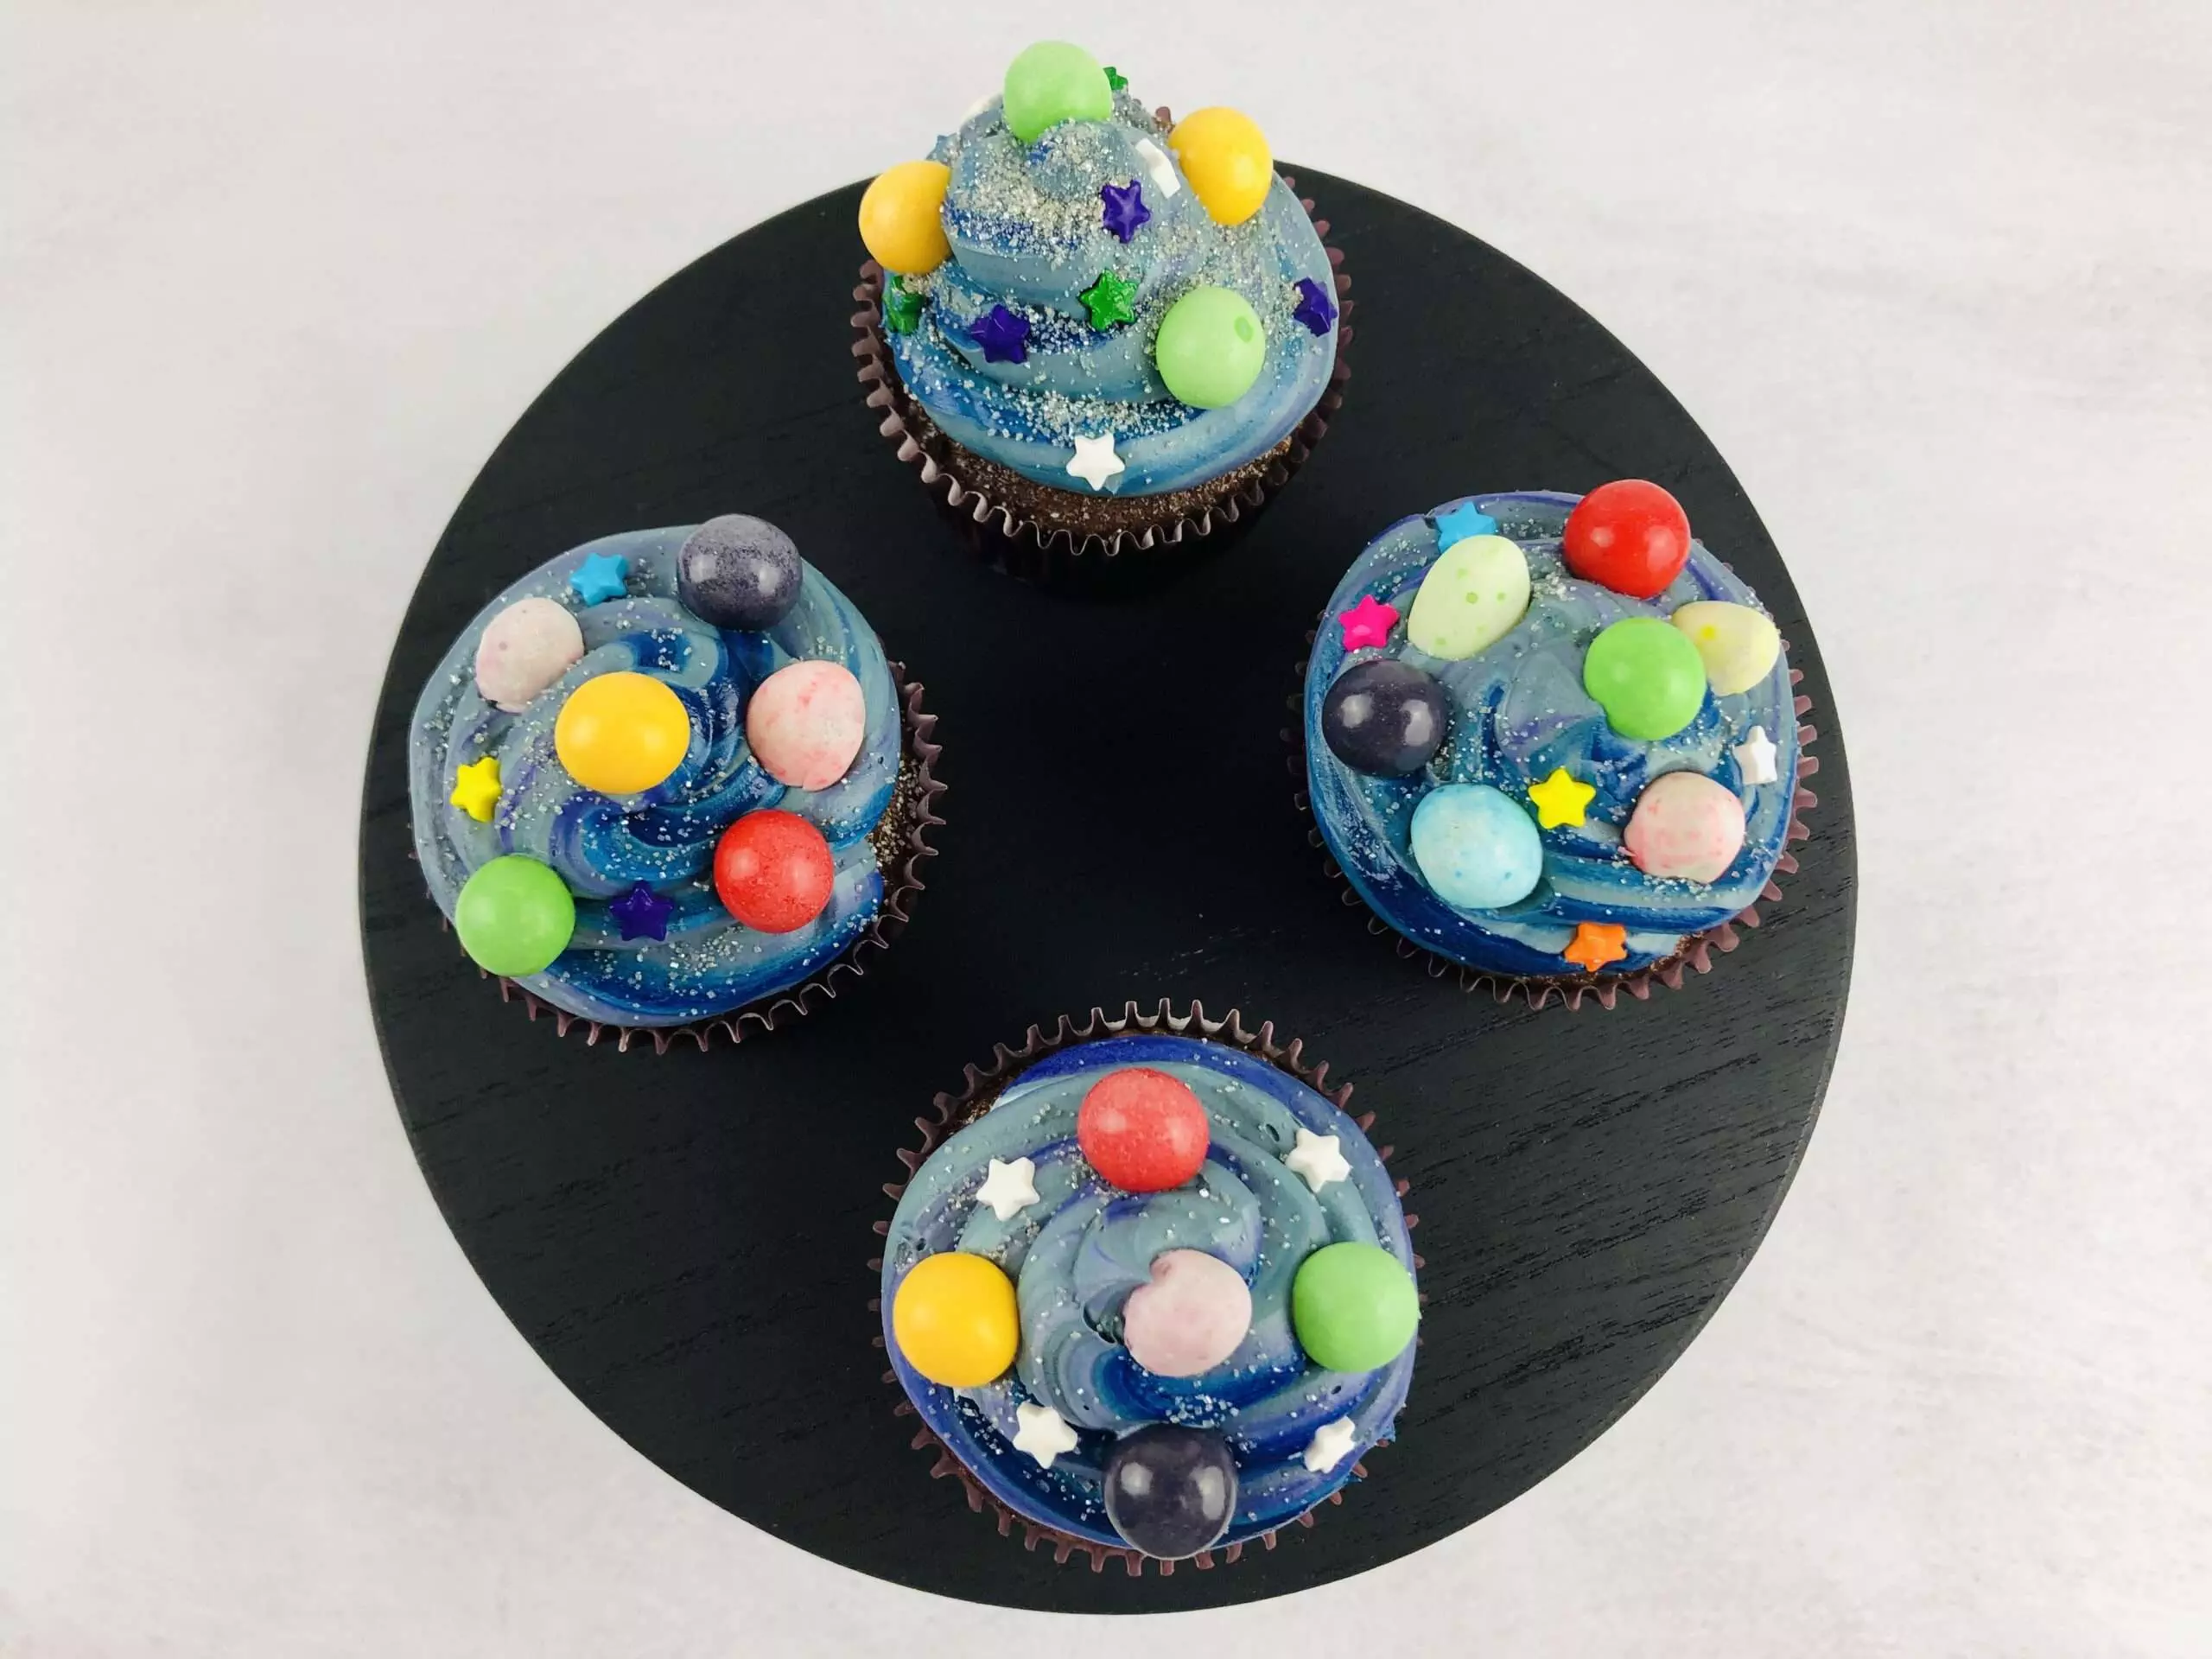 galaxy cupcakes